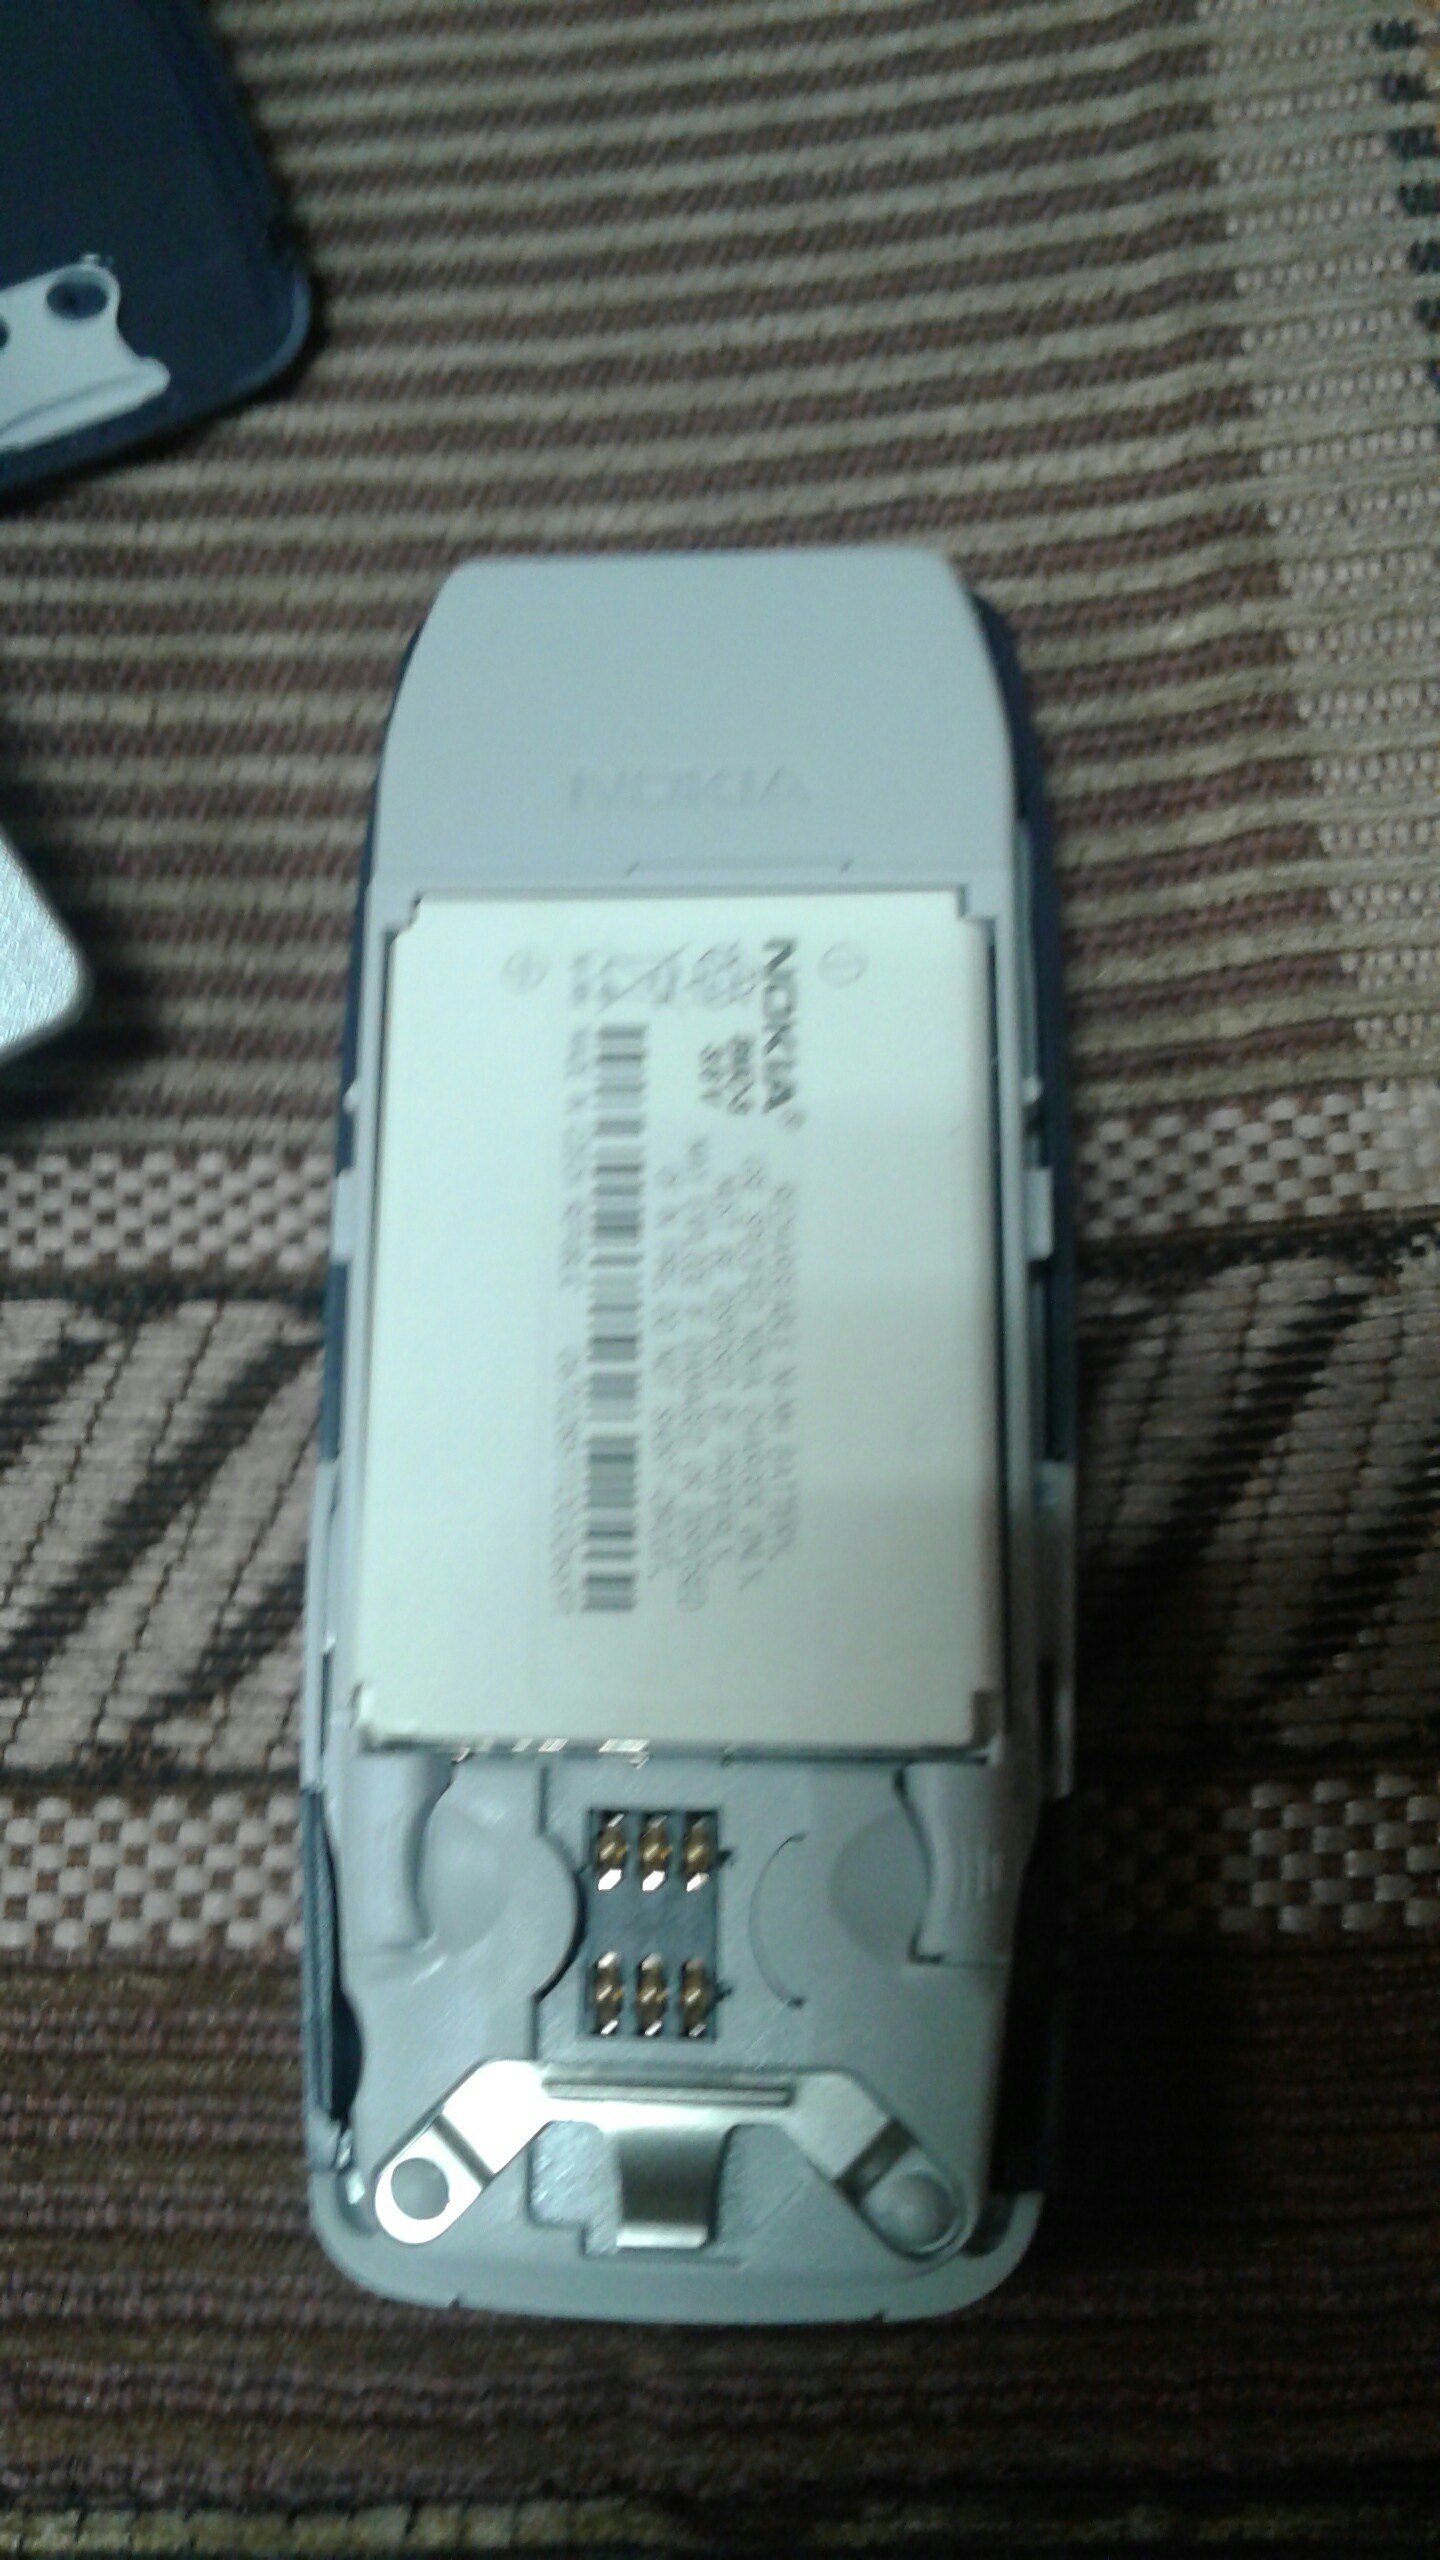 Nokia 3310 - Nokia, Battery, Longpost